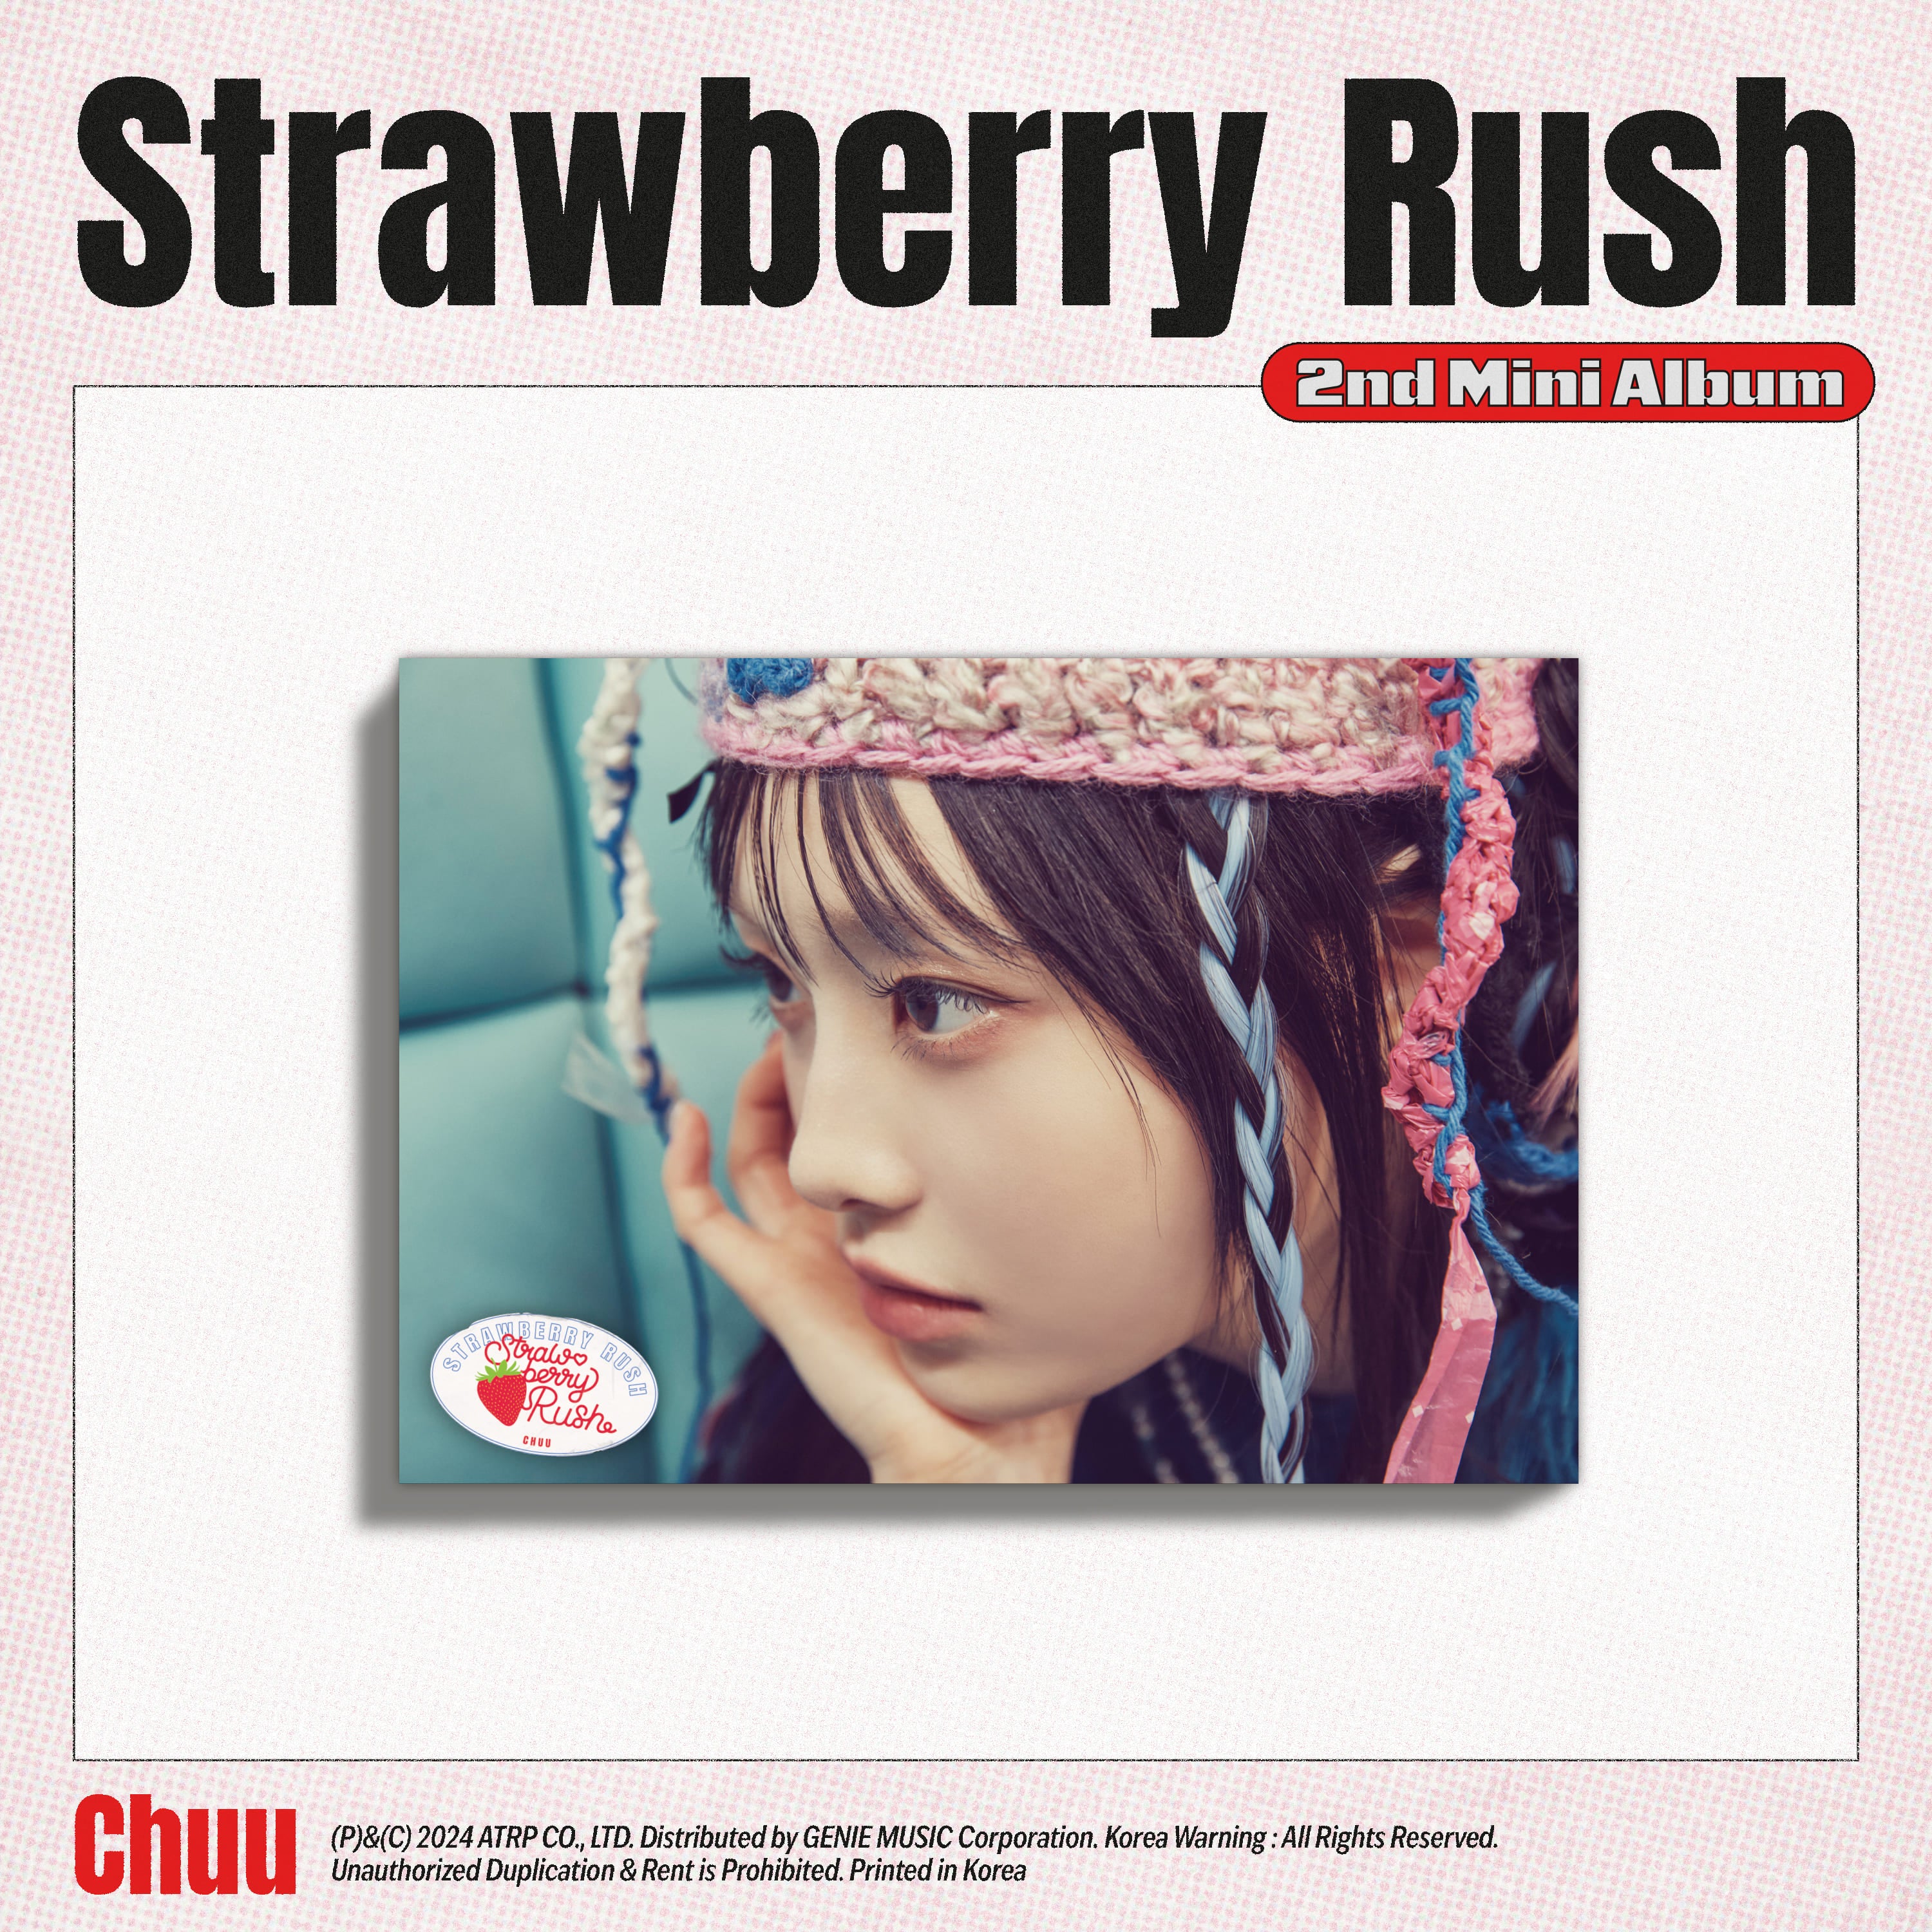 CHUU 2nd Mini Album Strawberry Rush STAYG ALBUM Version